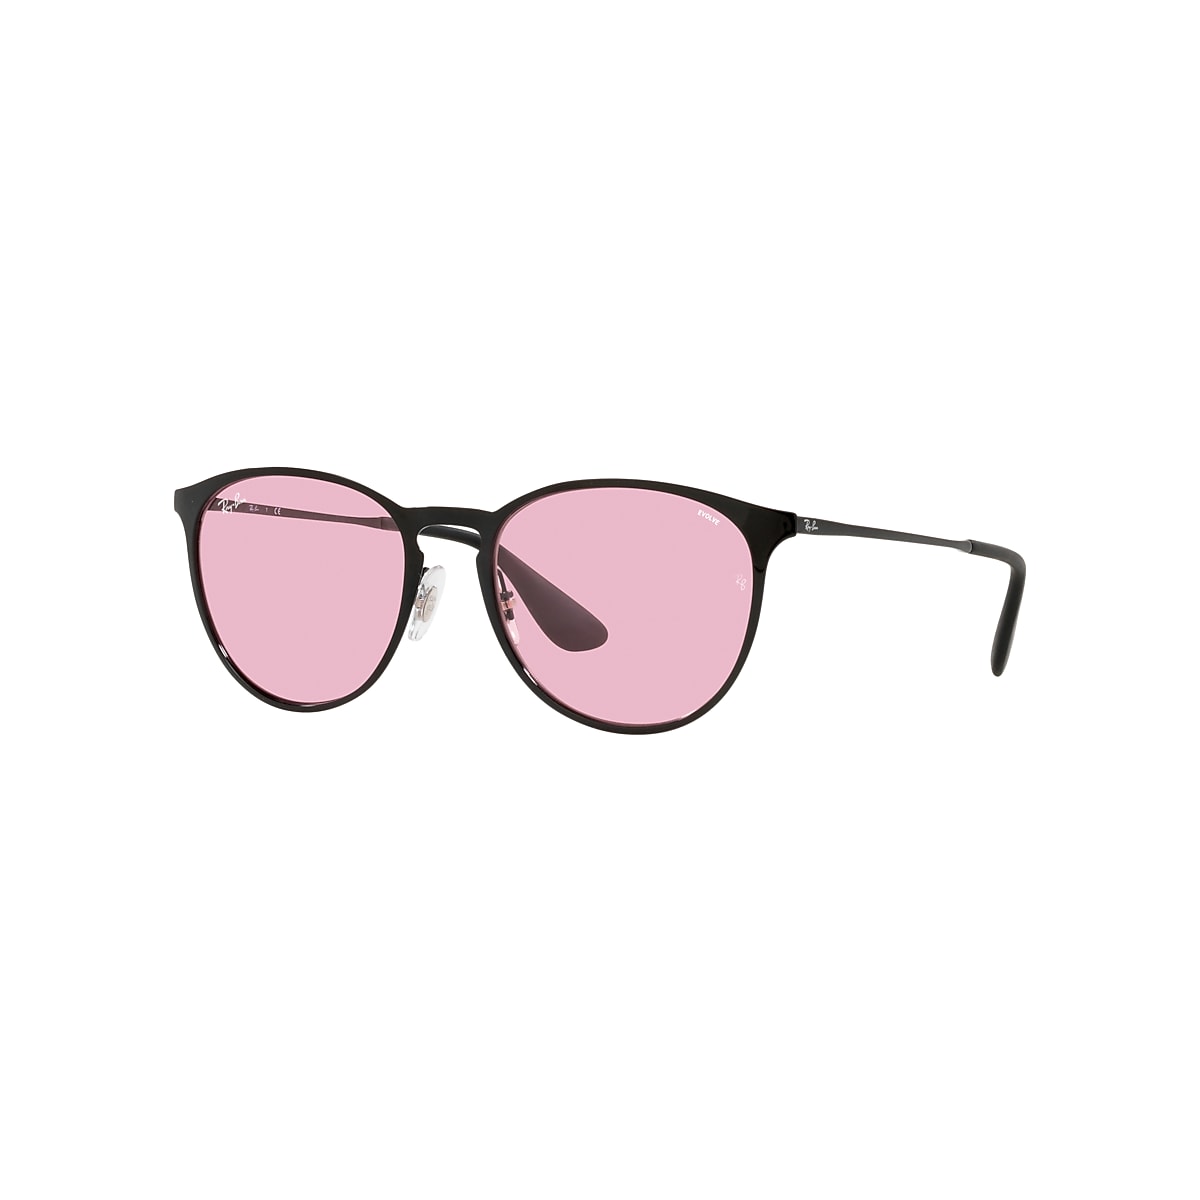 Erika Metal Evolve Sunglasses in Black and Pink Photochromic | Ray-Ban®